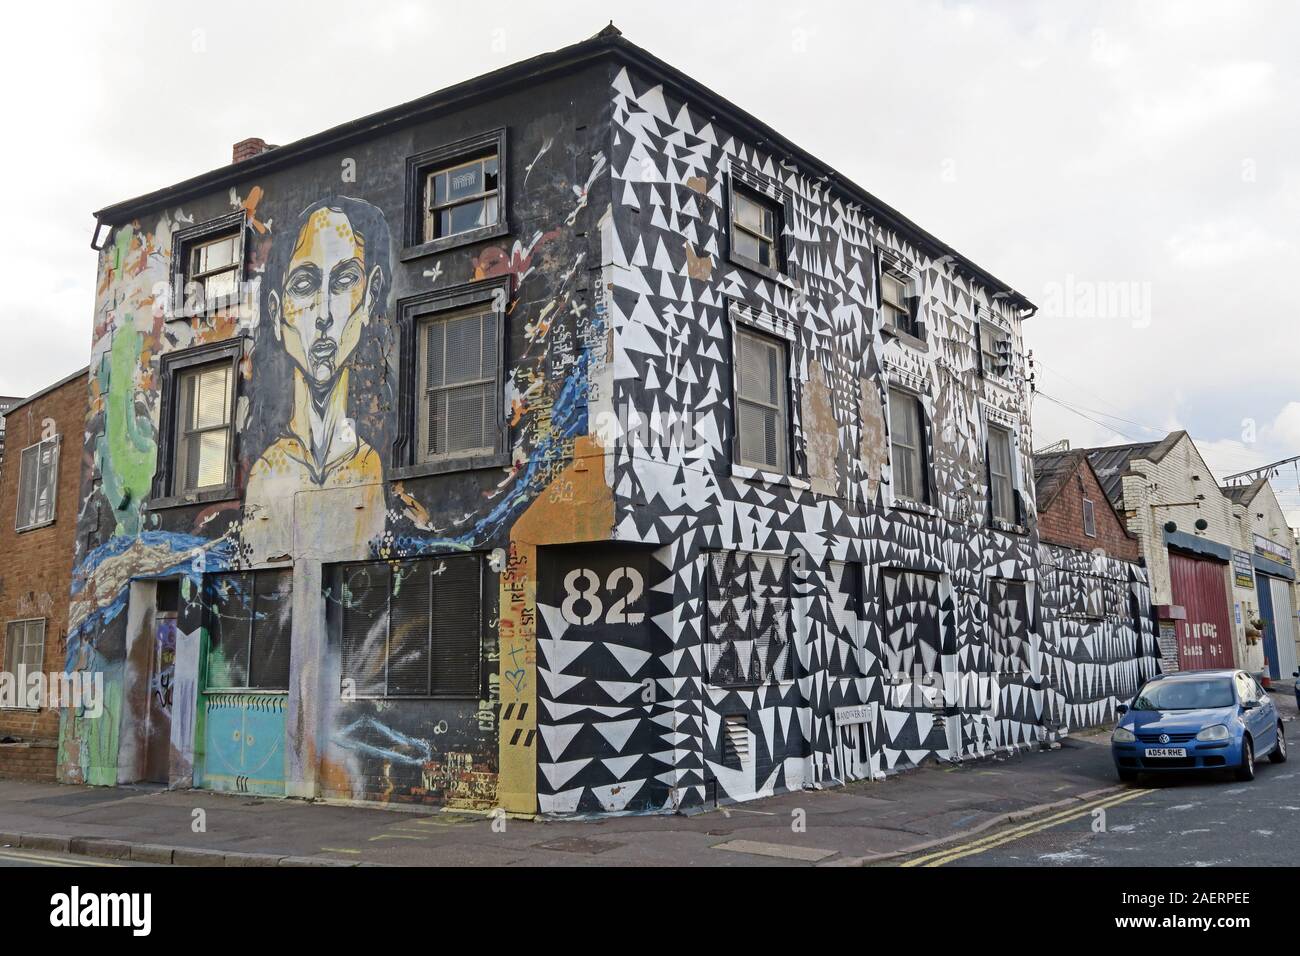 82 Graffiti Urban Street art, à Floodgate St, Digbeth, Bordesley & Highgate, Birmingham, West Midlands, Angleterre, Royaume-Uni, B5 5 E Banque D'Images